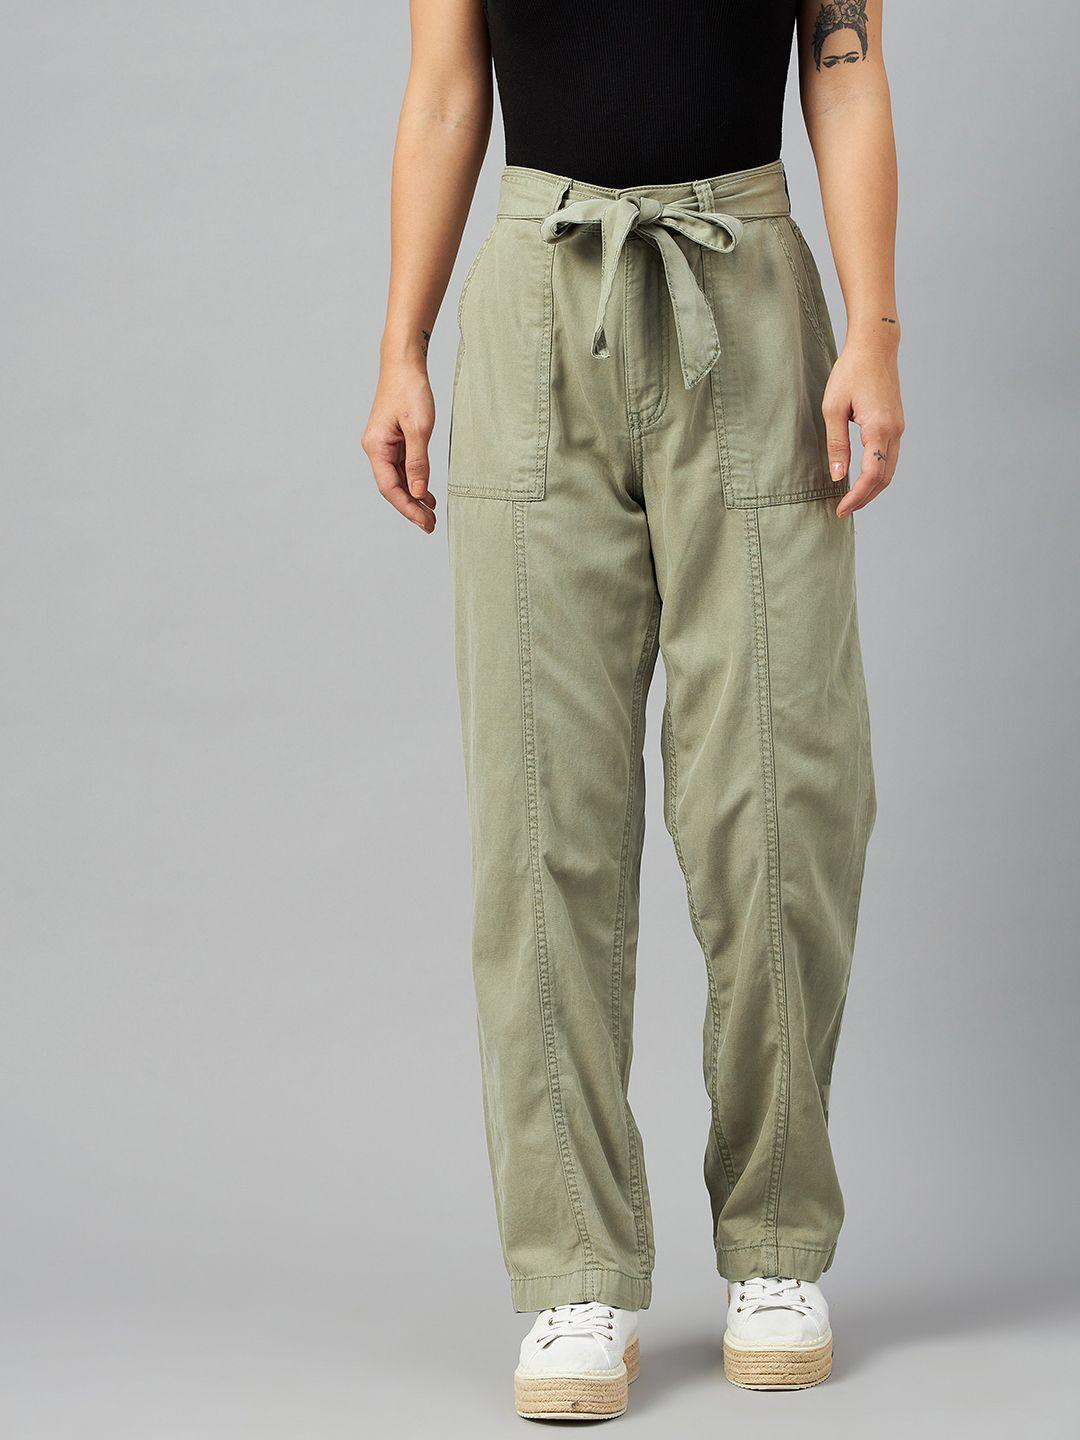 marks & spencer women olive green high-rise jeans wtih belt